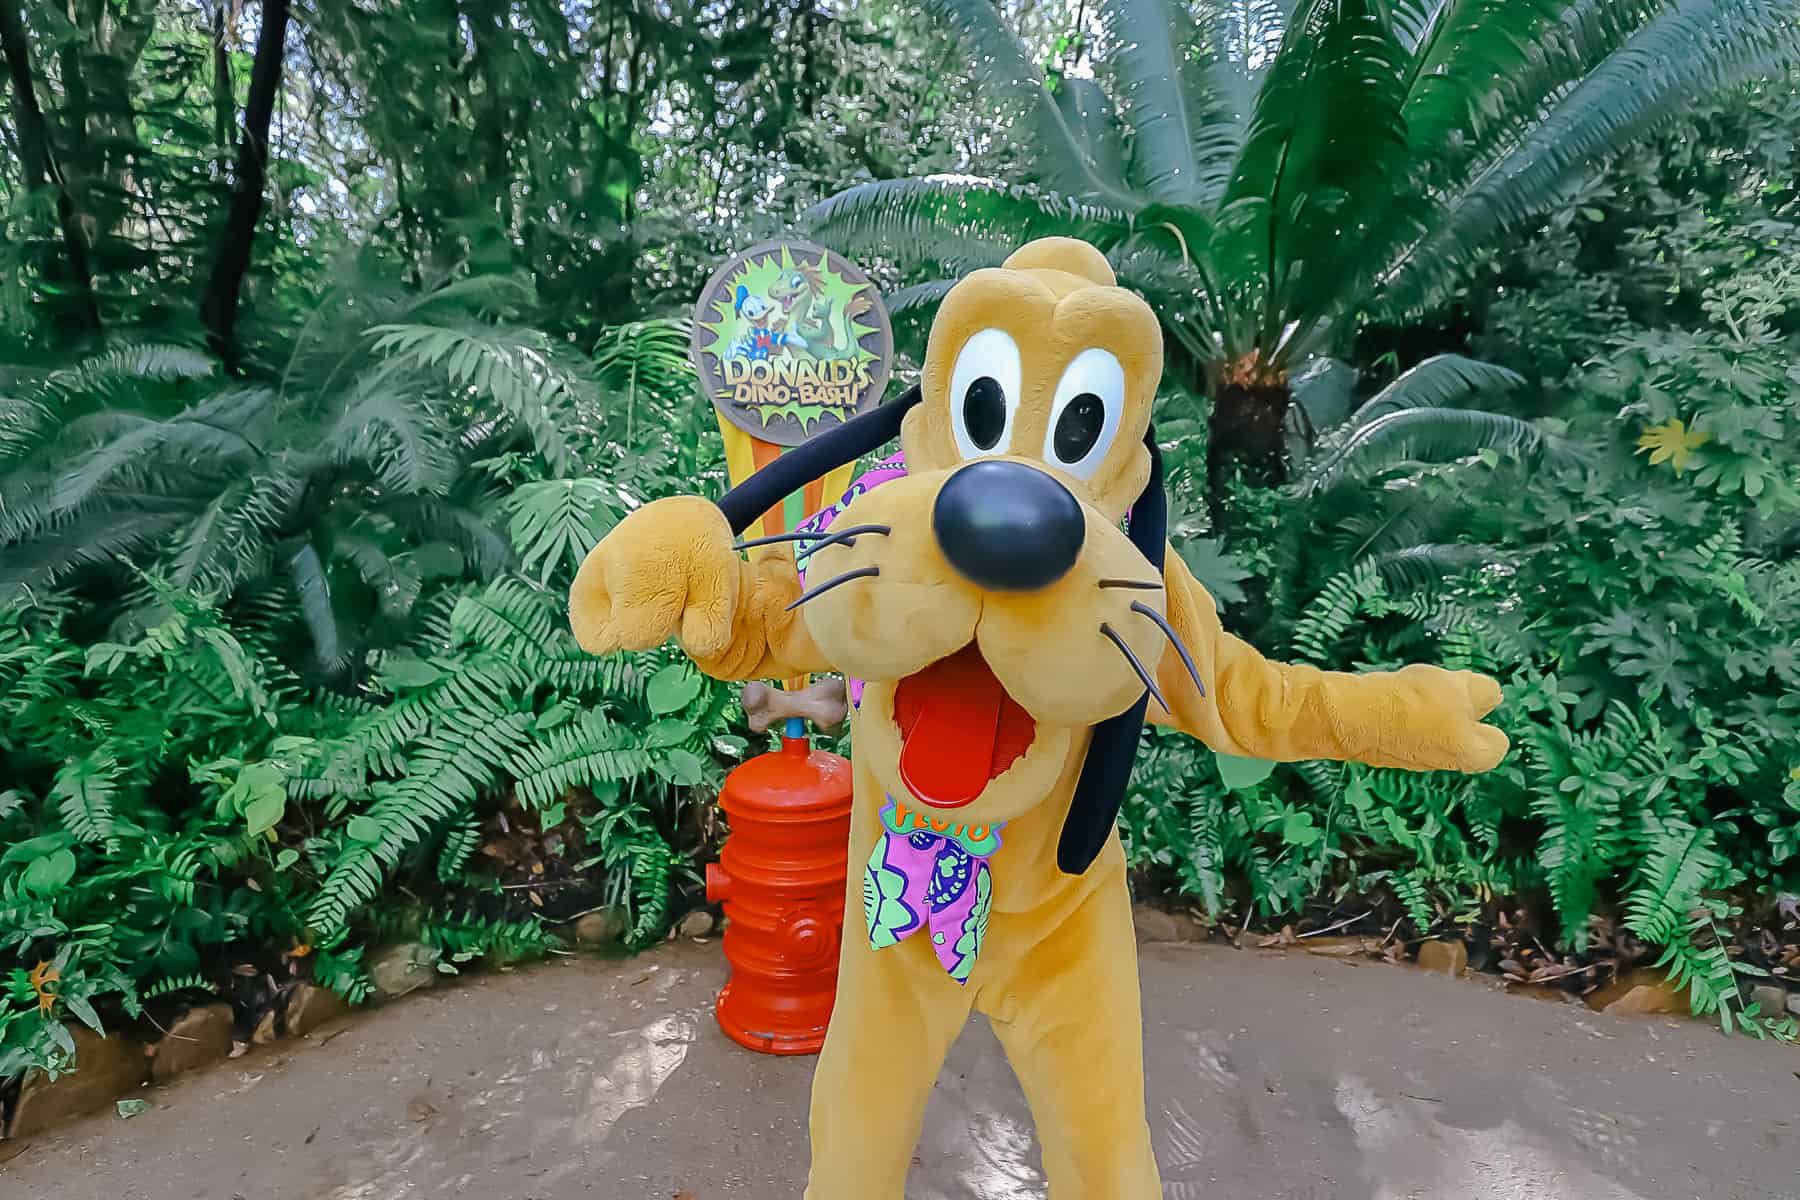 Meet Pluto at Donald’s Dino-Bash at Disney’s Animal Kingdom